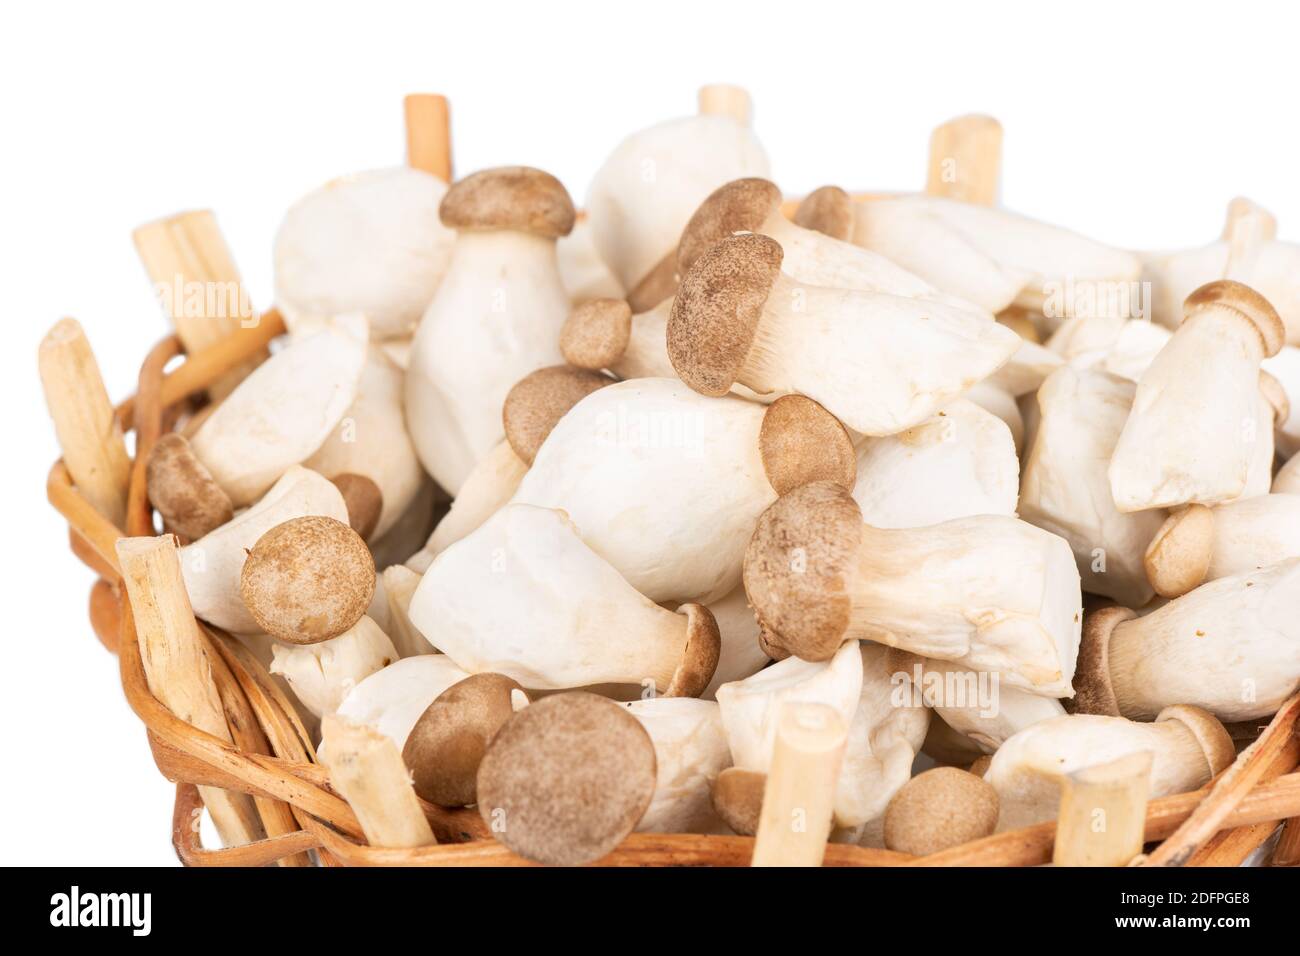 Small eringi mushrooms in a basket close up Stock Photo